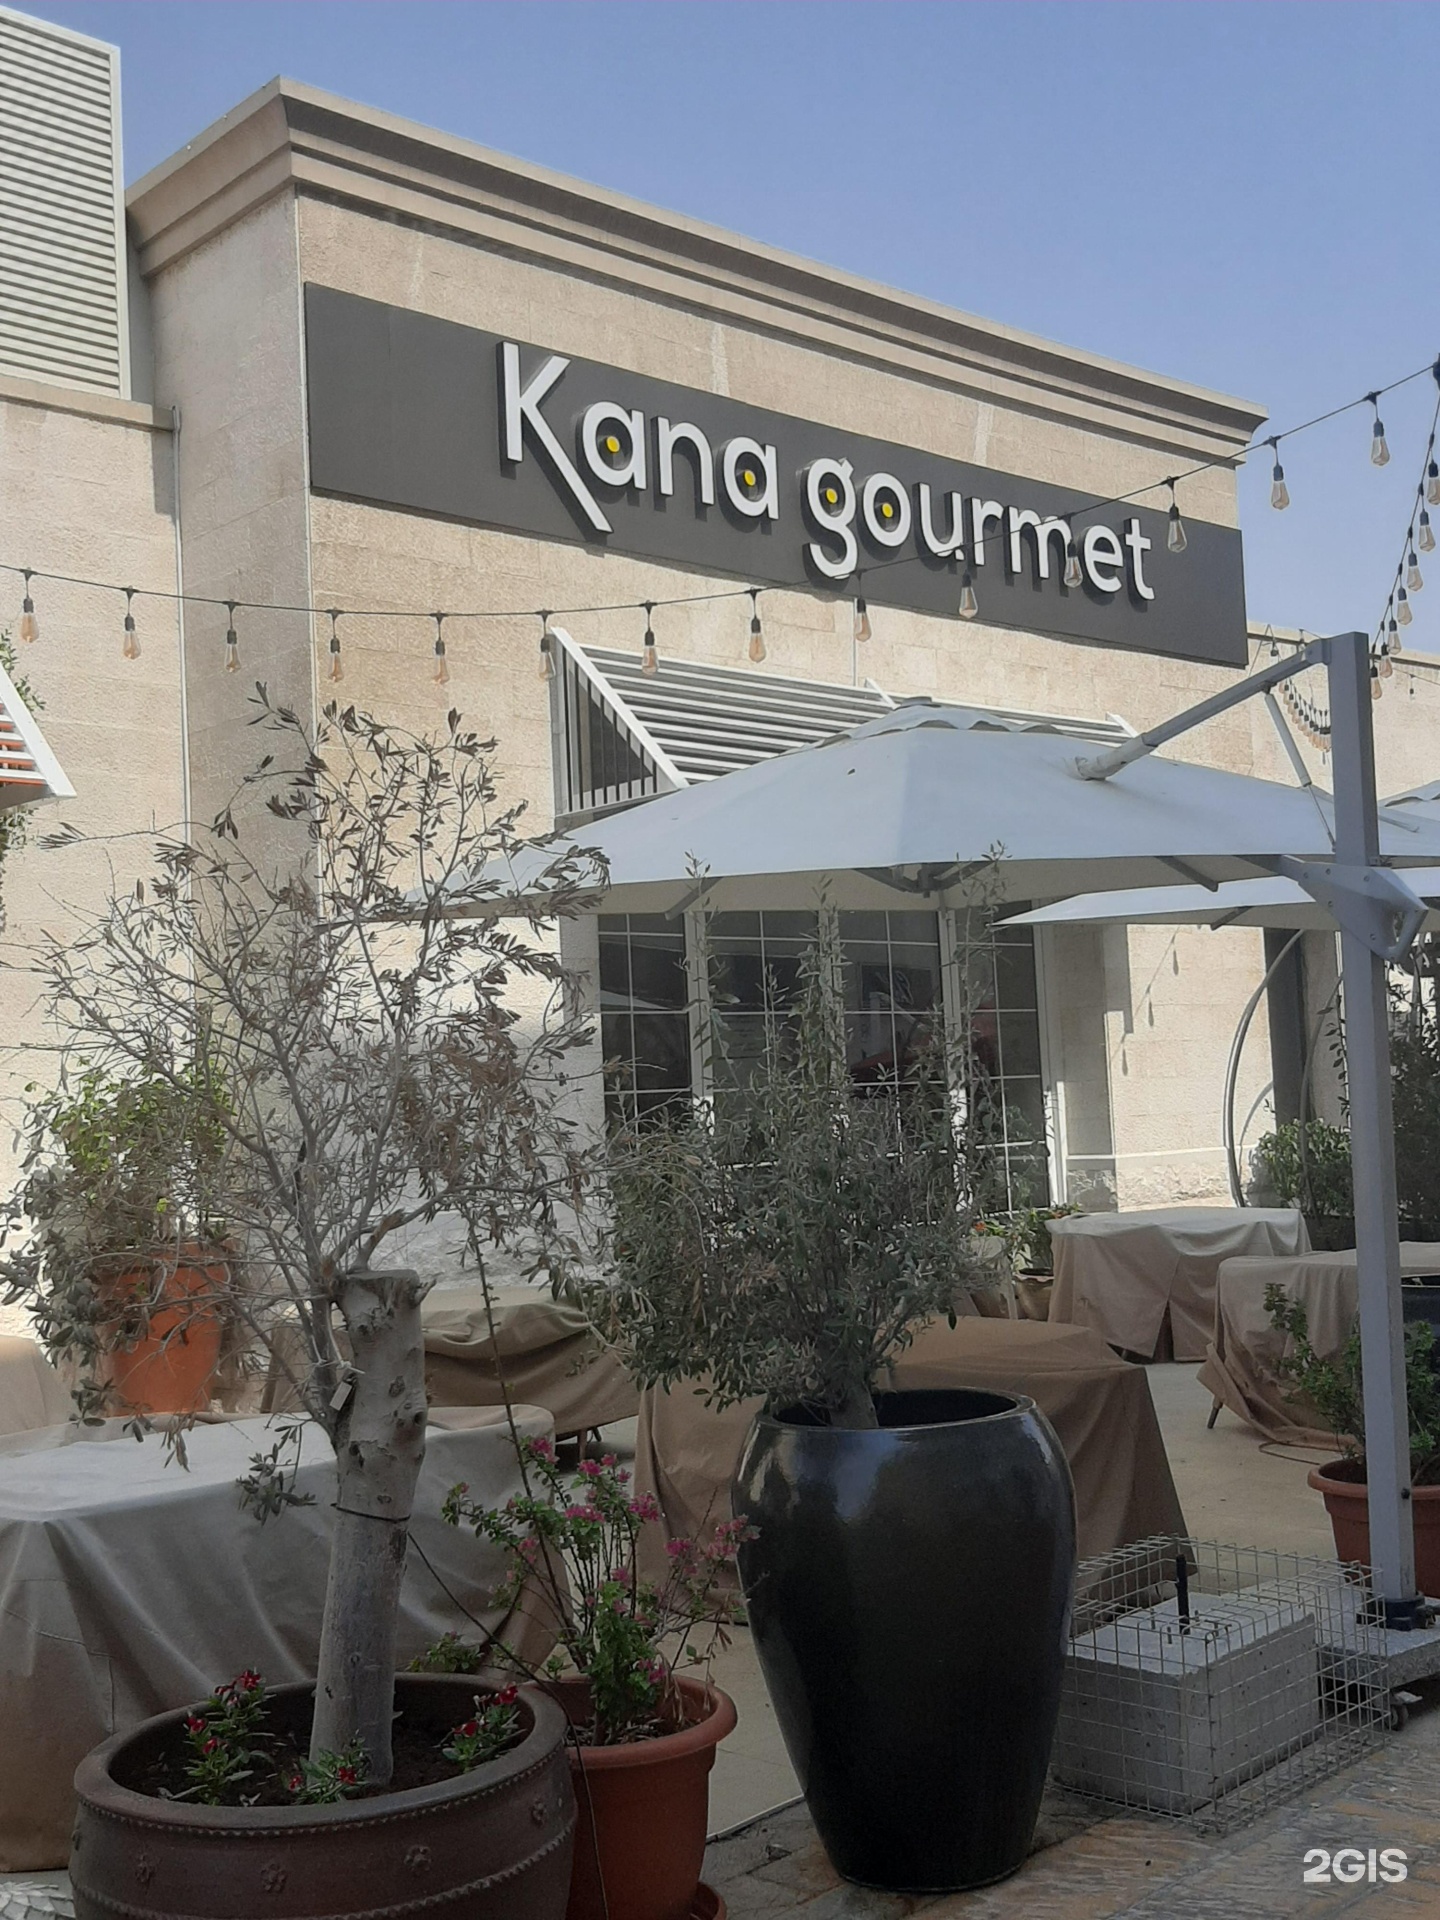 Kana Gourmet, restaurant, 2a, 47 — street, 2GIS Dubai